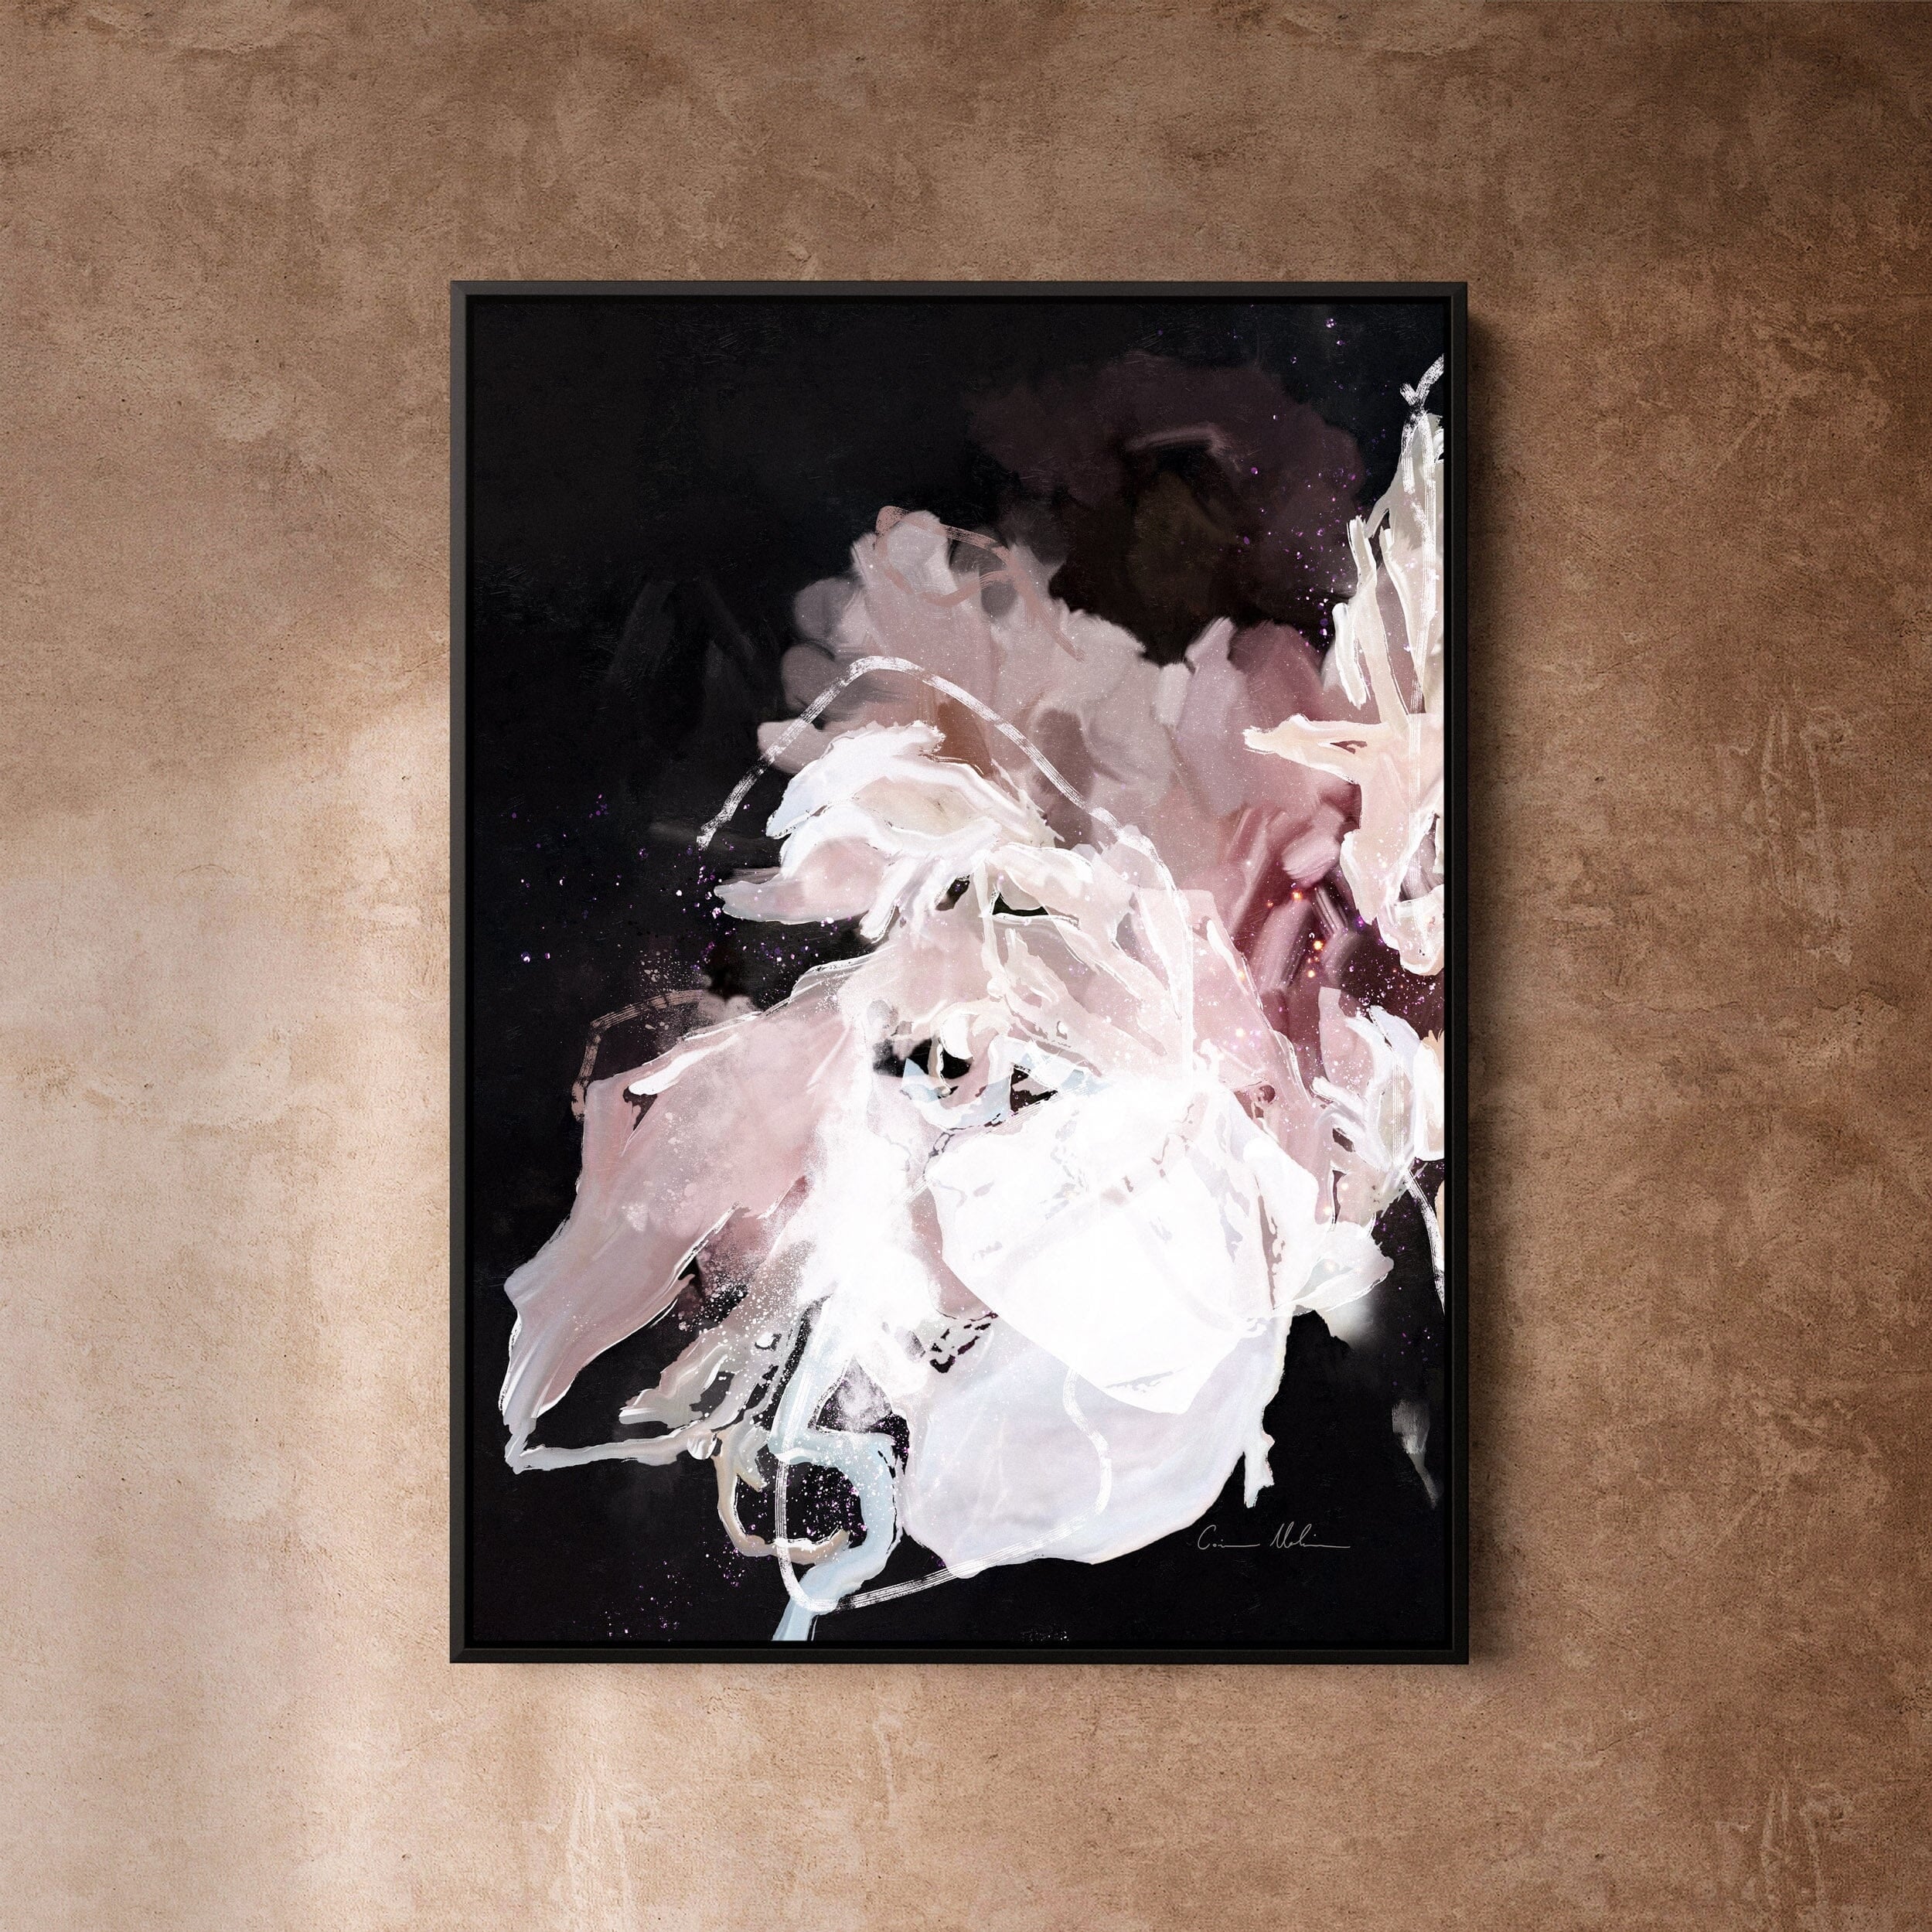 "Dubai" on Canvas - Portrait Canvas Wall Art Corinne Melanie Art Professionally Framed - Black 24x32in / 60x80cm 